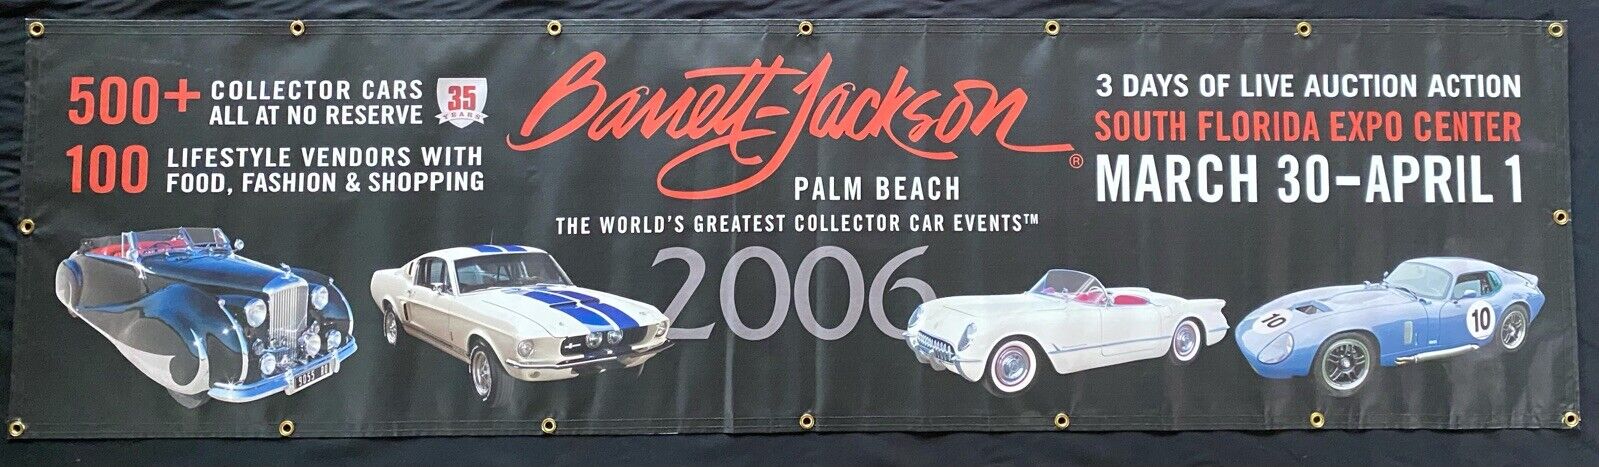 2006 Barrett-Jackson Palm Beach Car Auction 8' BANNER Boss Mustang Cobra Daytona